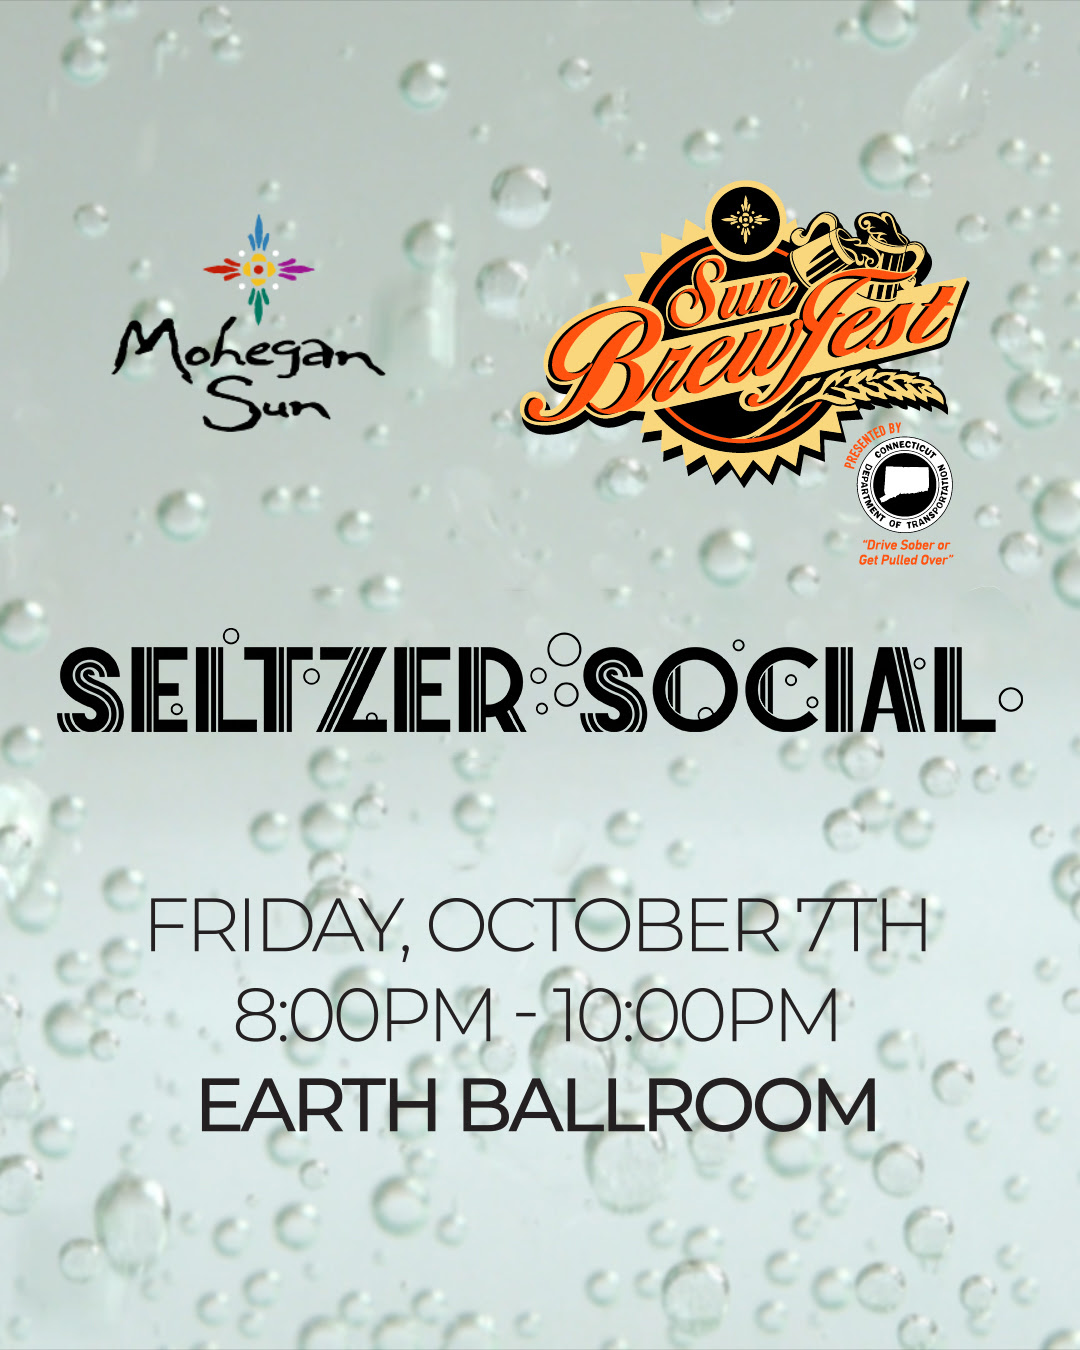 Mohegan Sun BrewFest: Seltzer Social